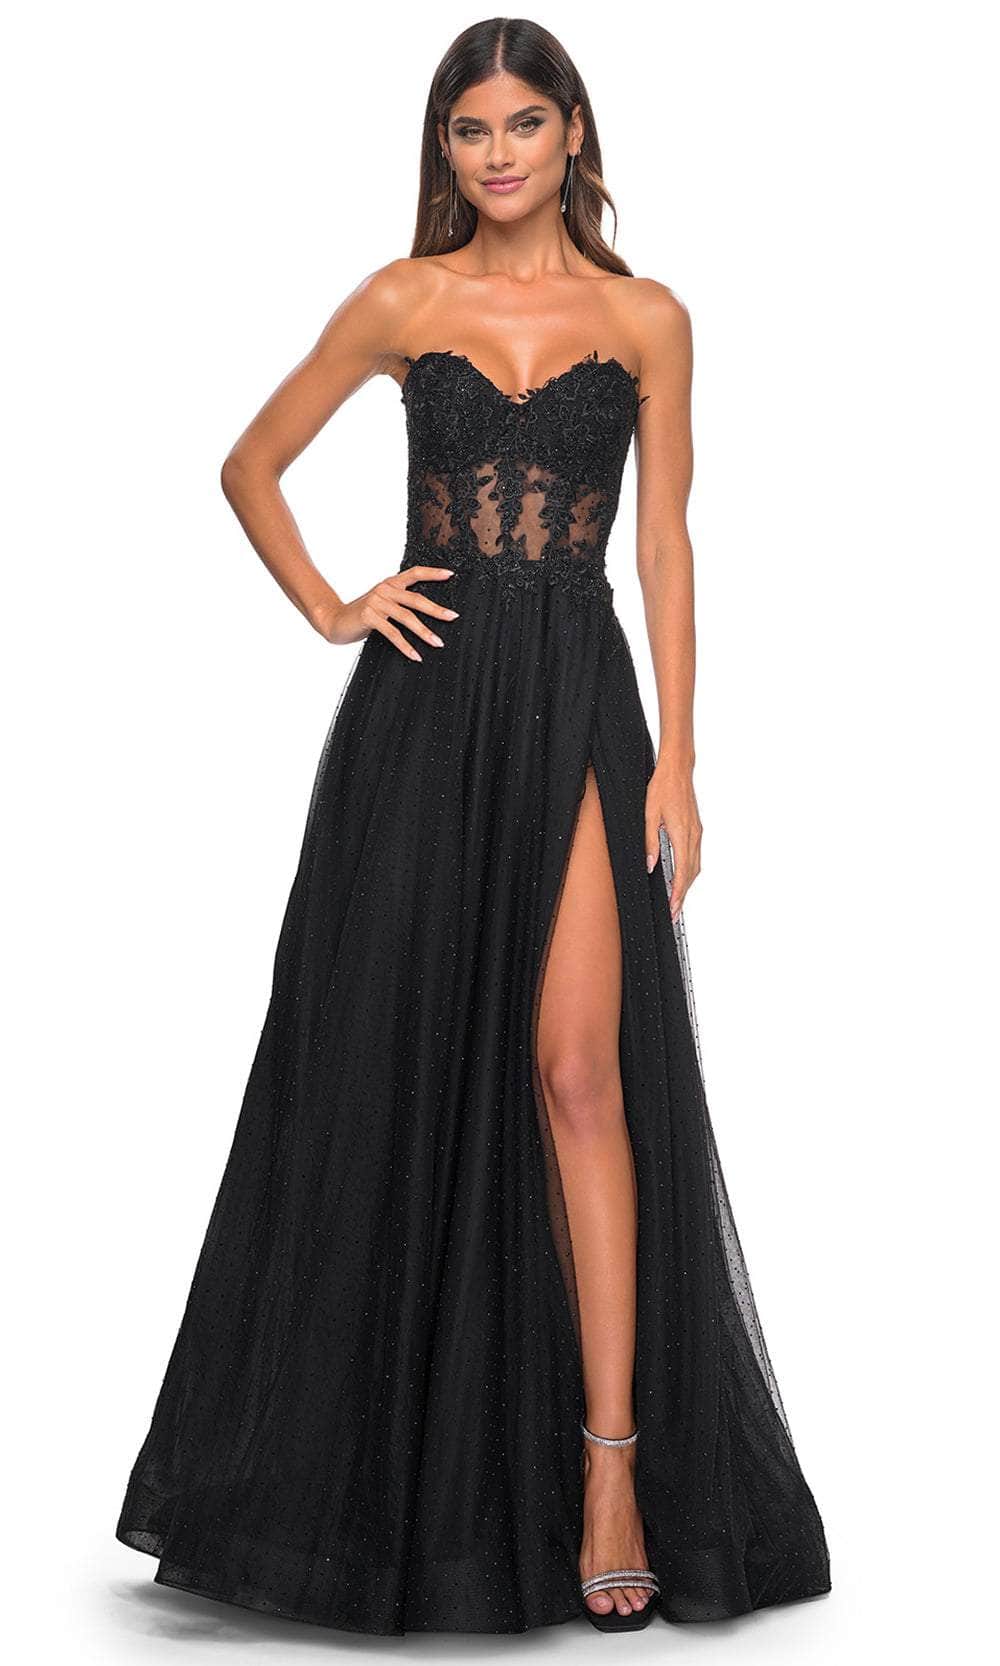 La Femme 32313 - Lace Bodice Prom Dress Prom Dresses 00 / Black